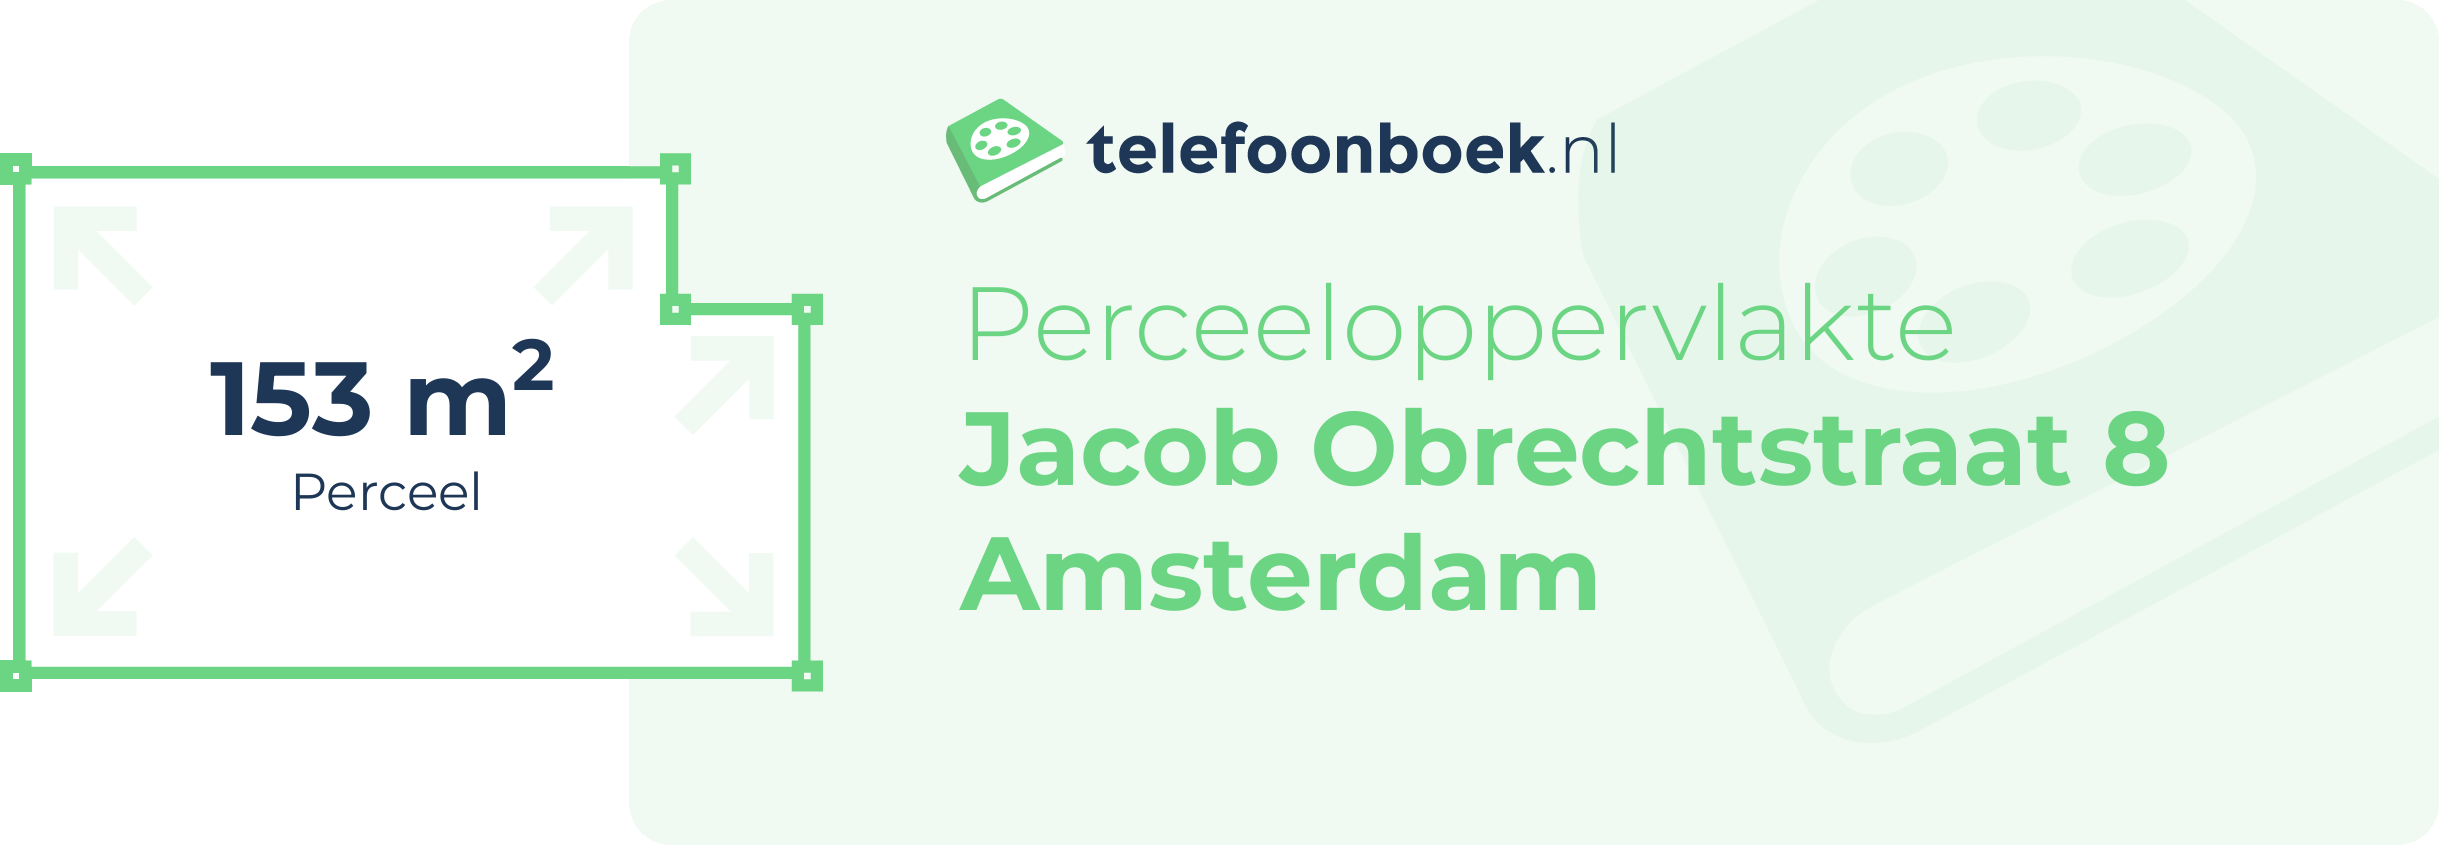 Perceeloppervlakte Jacob Obrechtstraat 8 Amsterdam